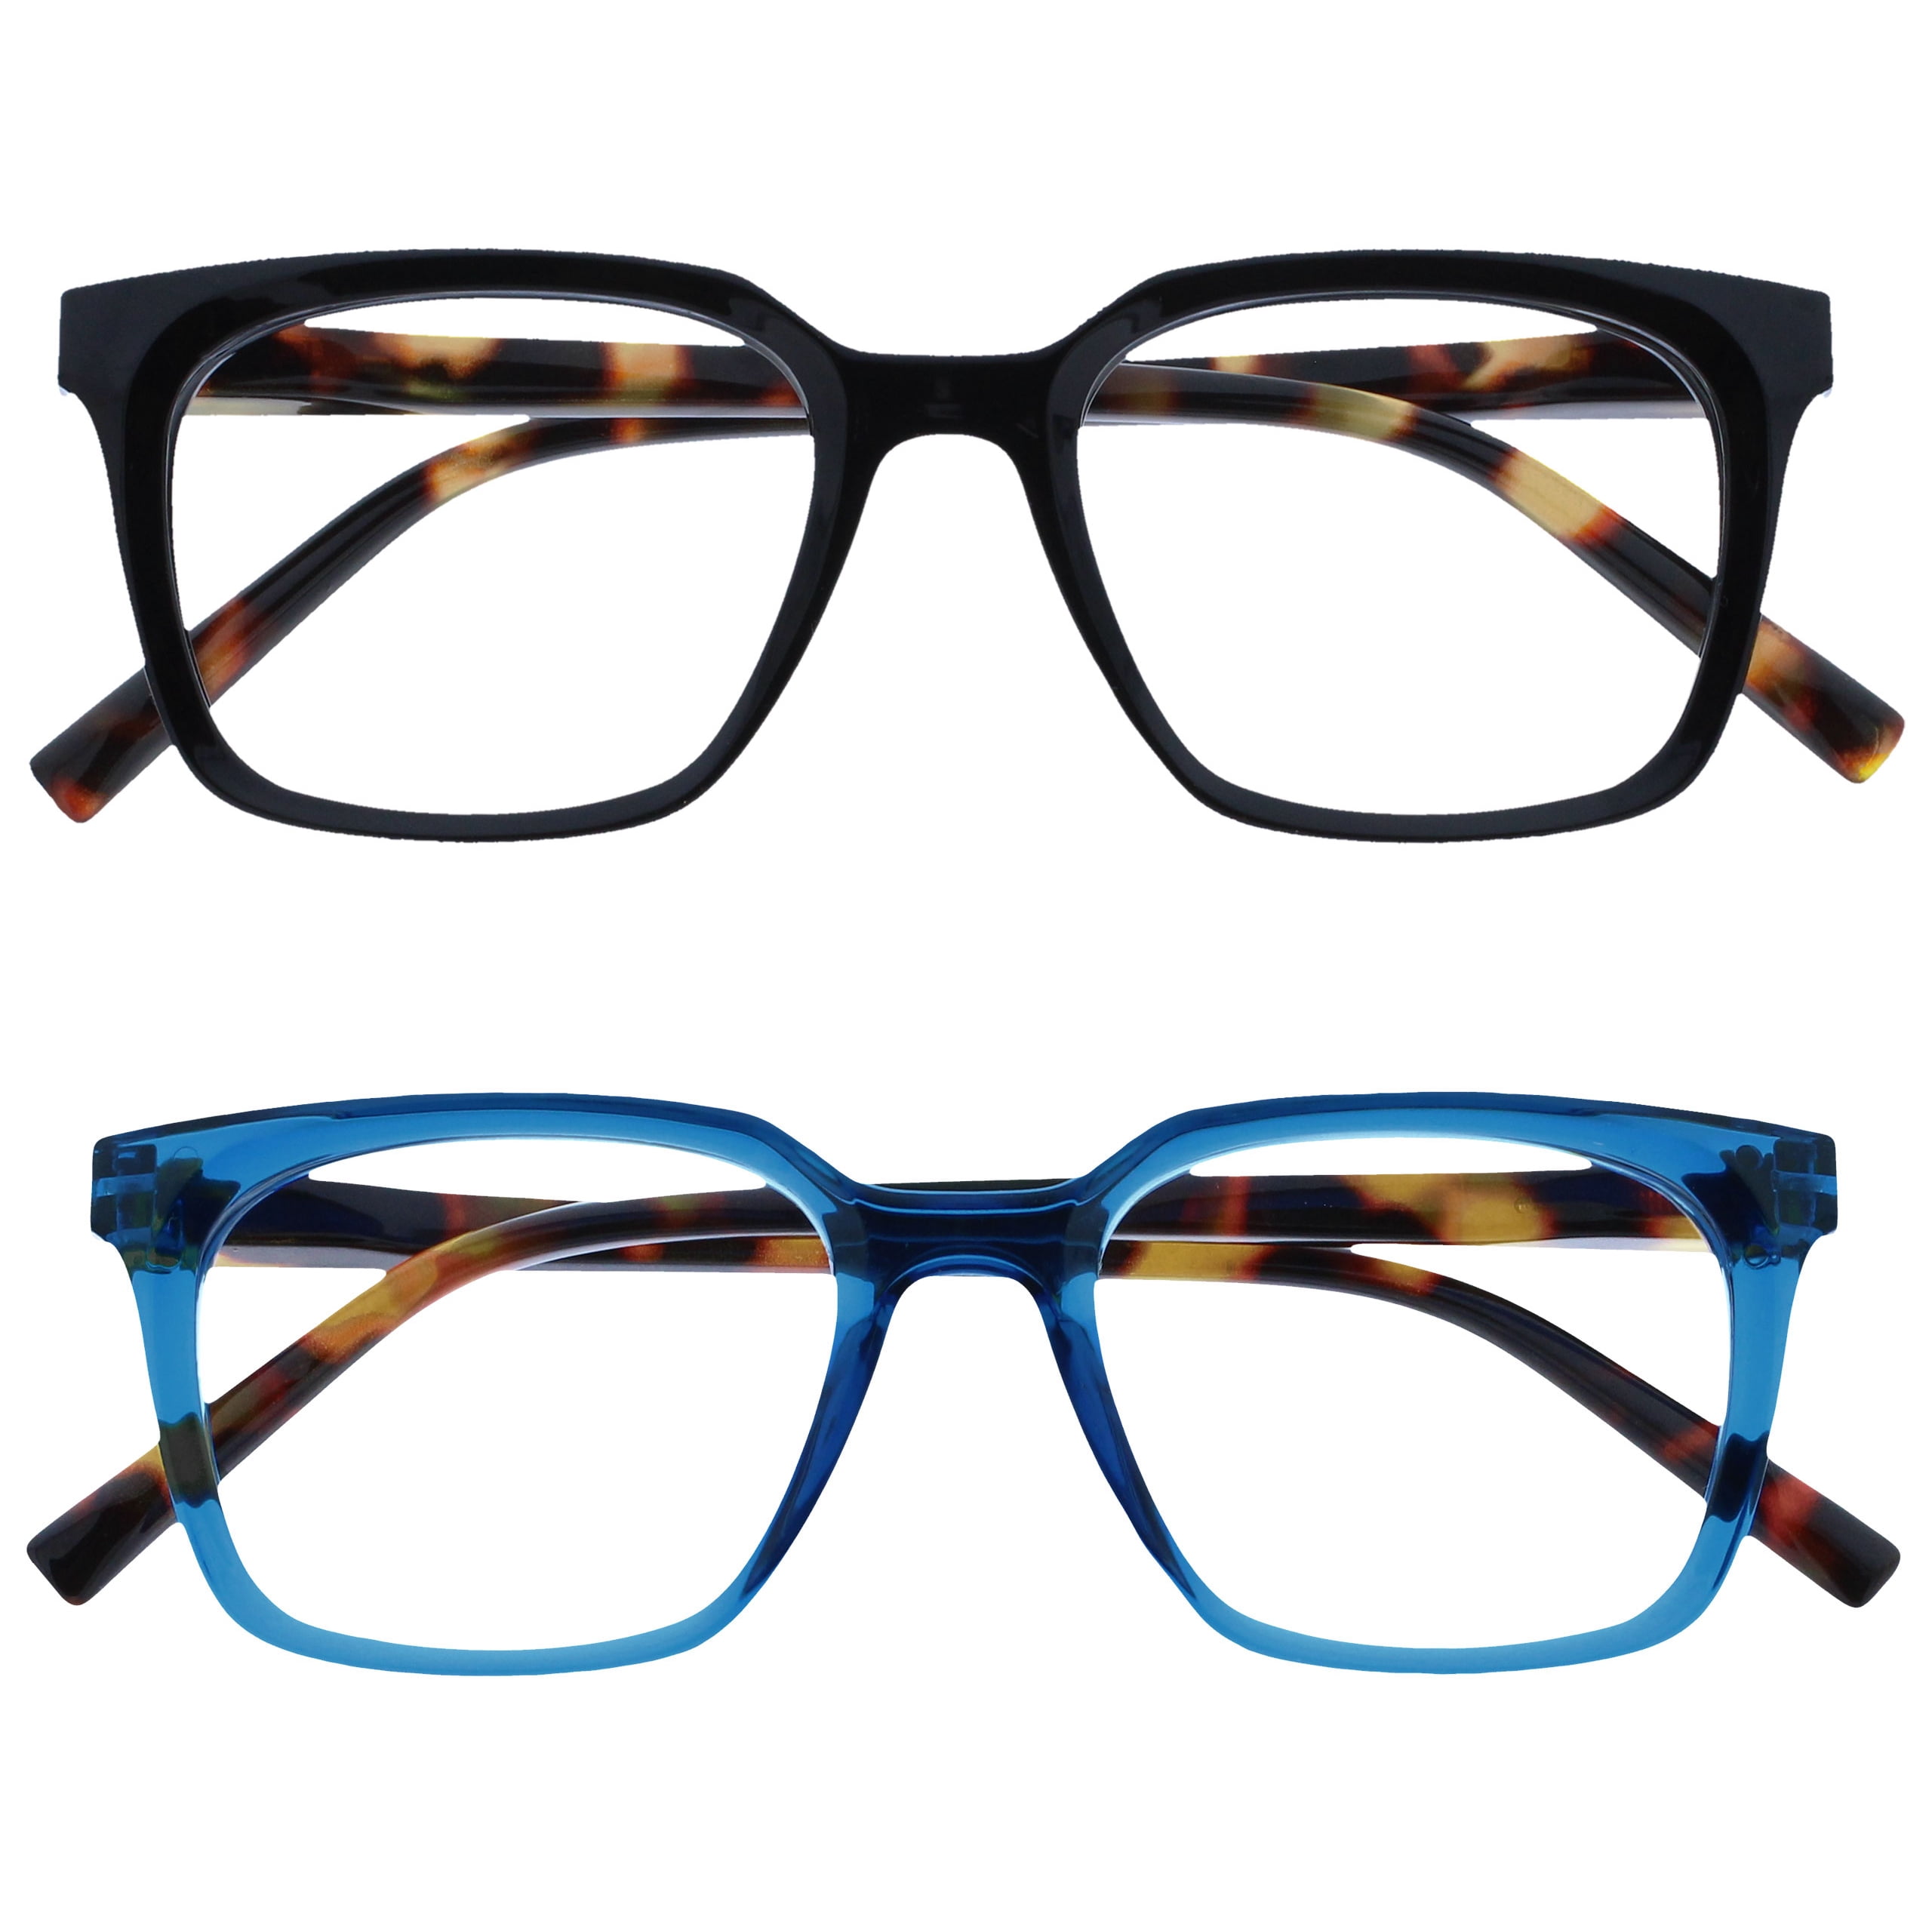 OPULIZE KOI Reading Glasses 2 Pack - Large Rectangular Frame - Black ...